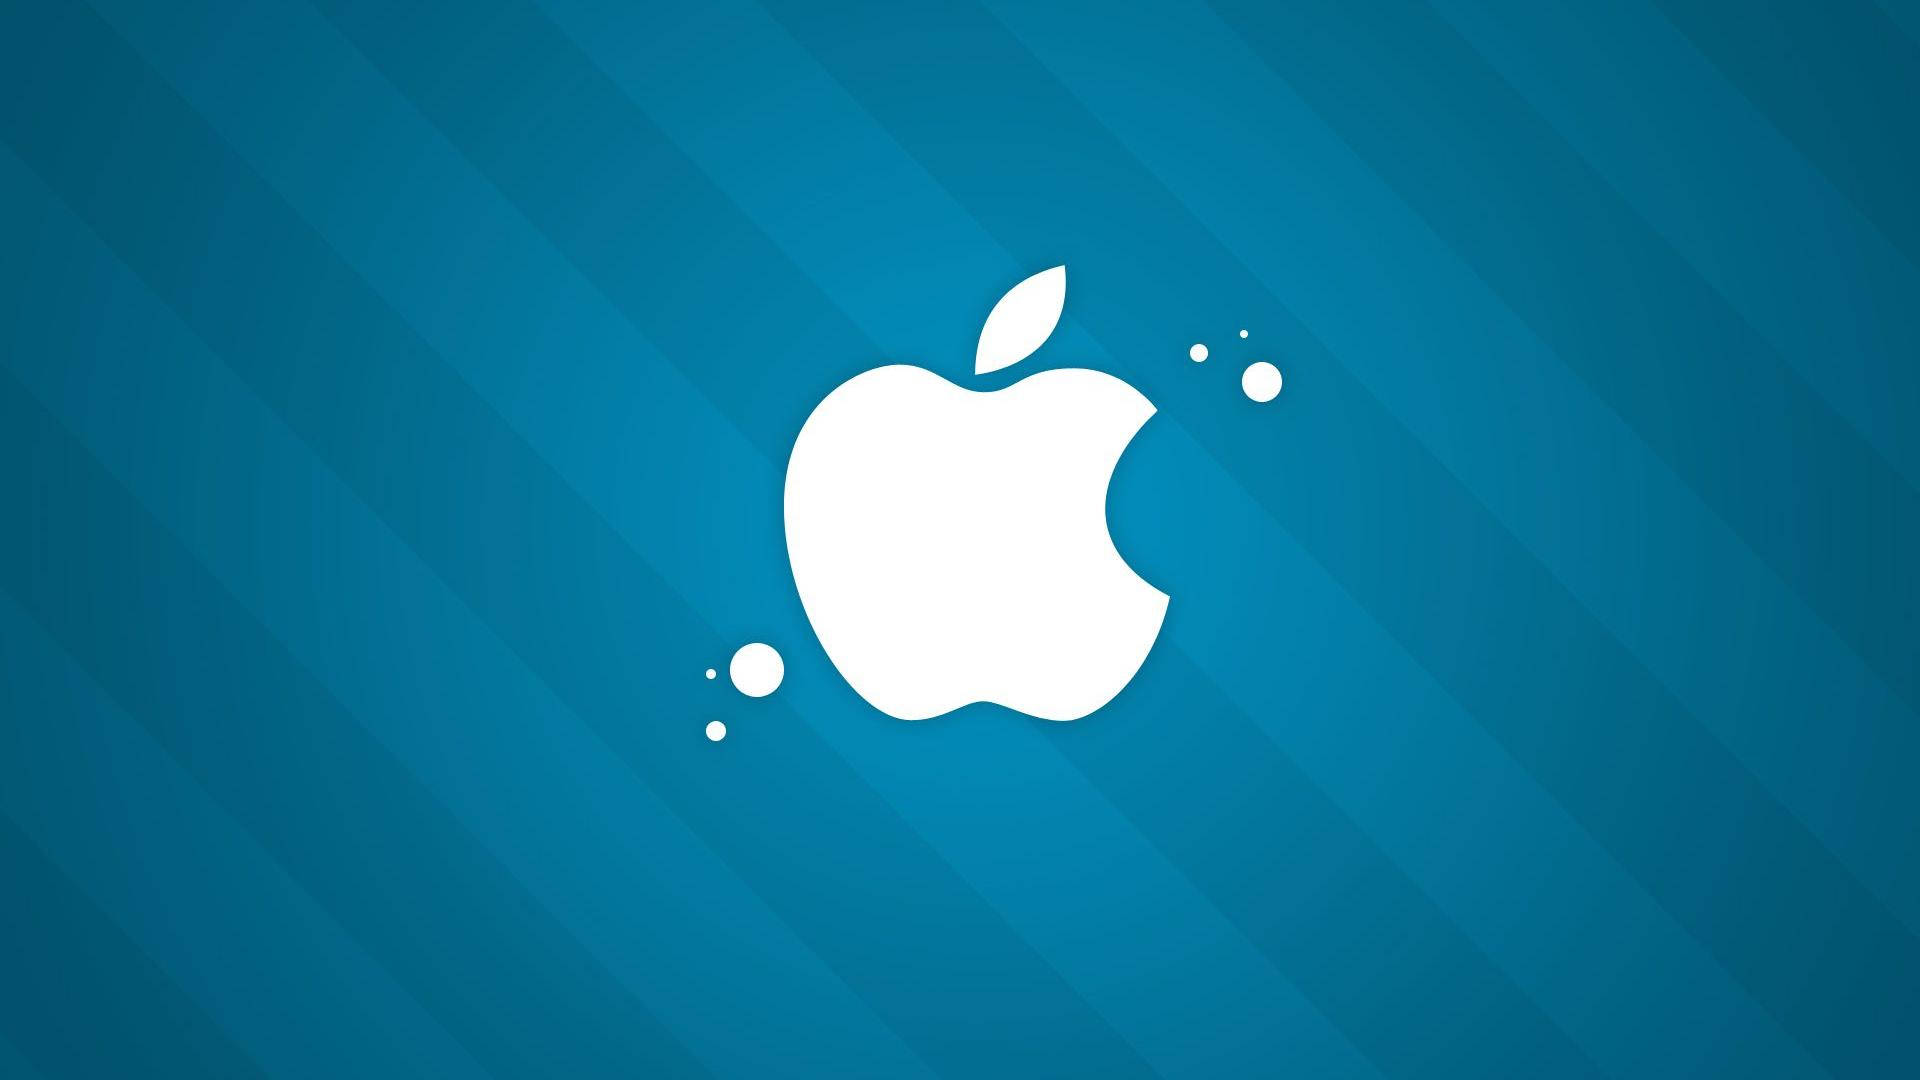 Apple Logo 4k On Blue Background